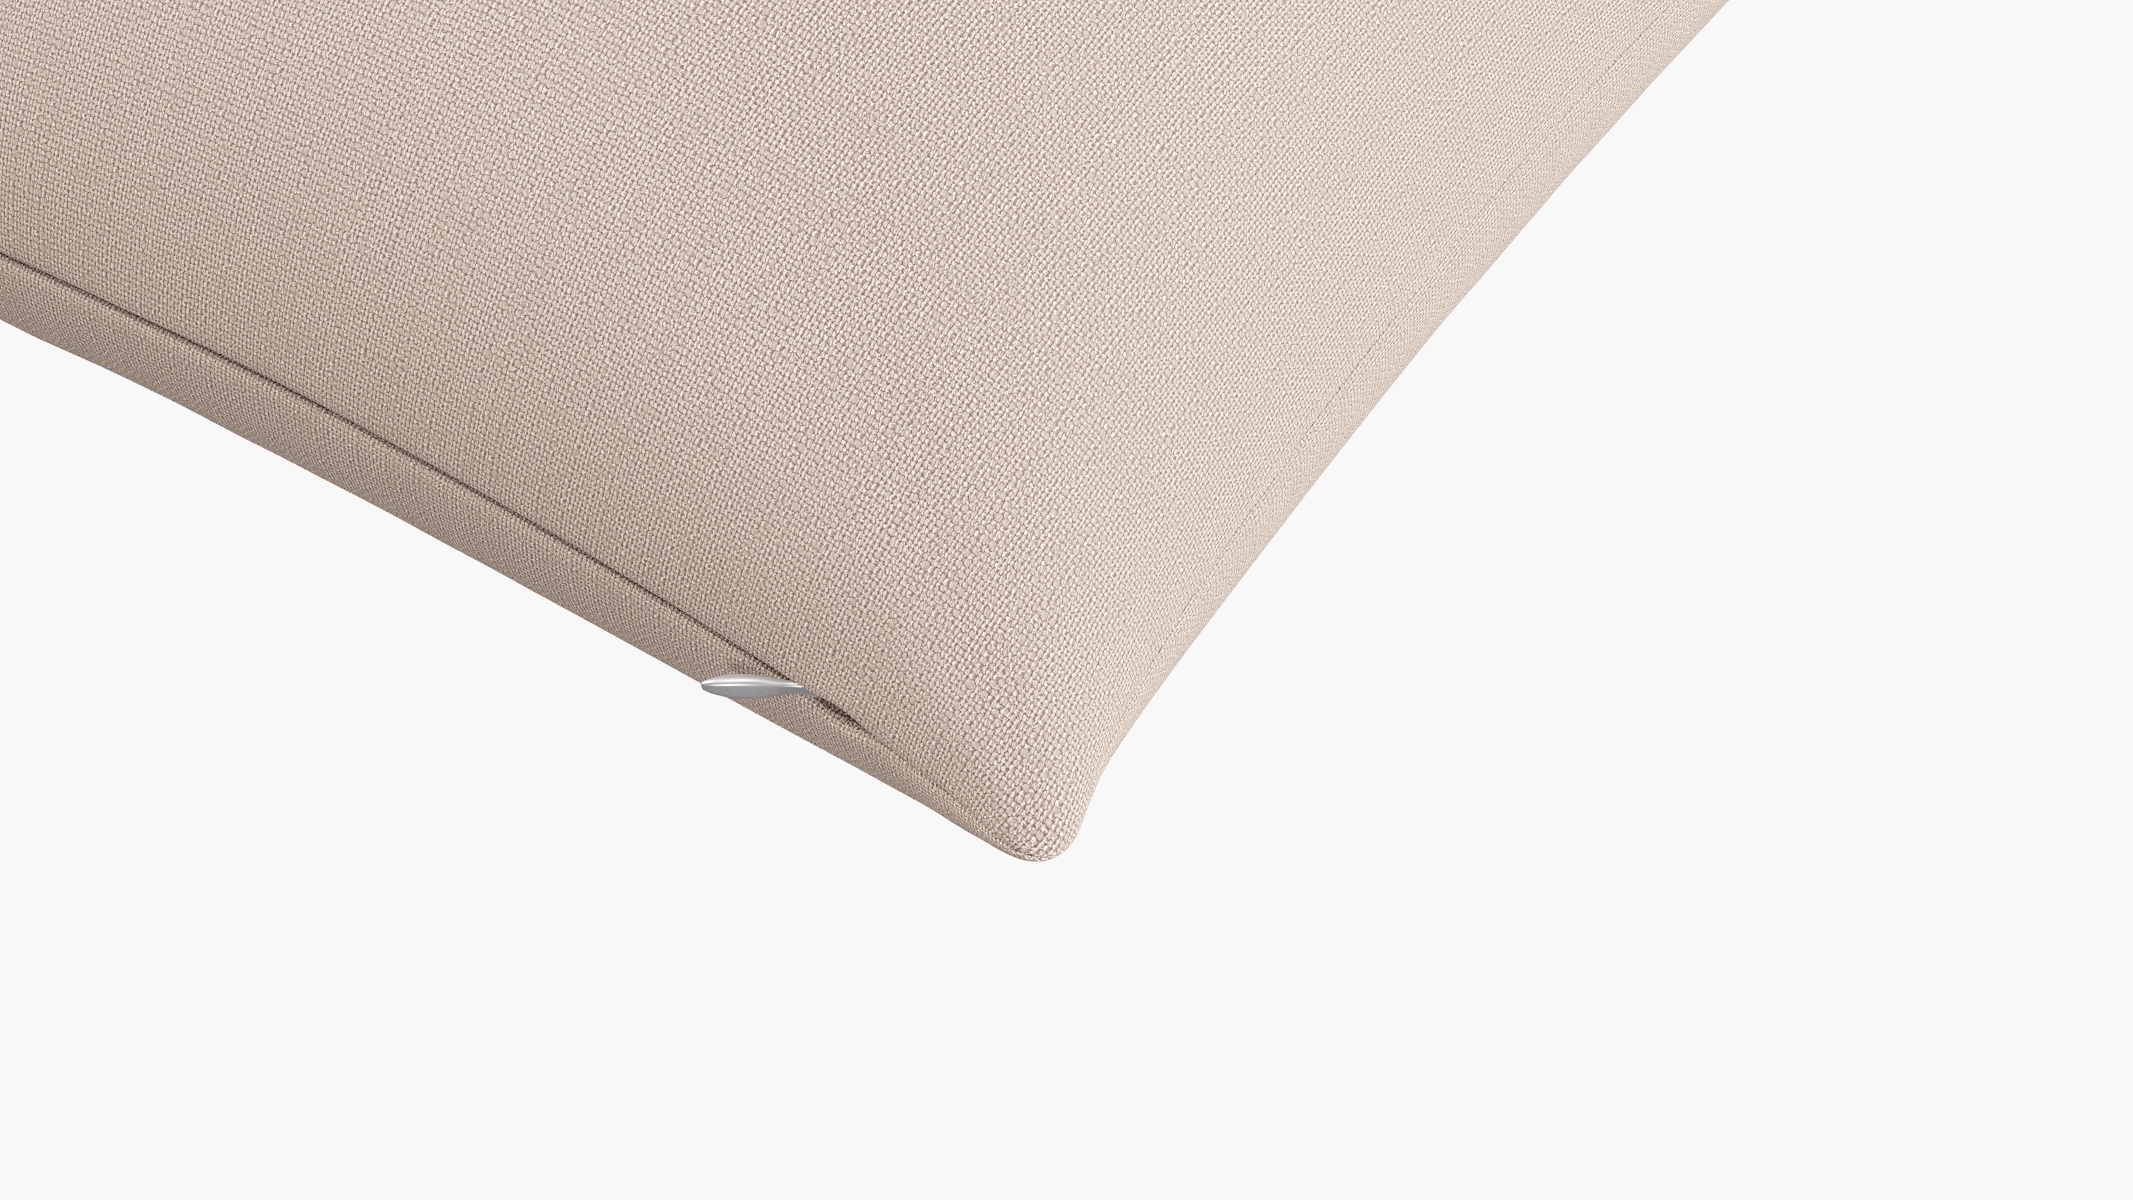 Throw Pillow 20", Husk Everyday Linen, 20" x 20" - Image 1